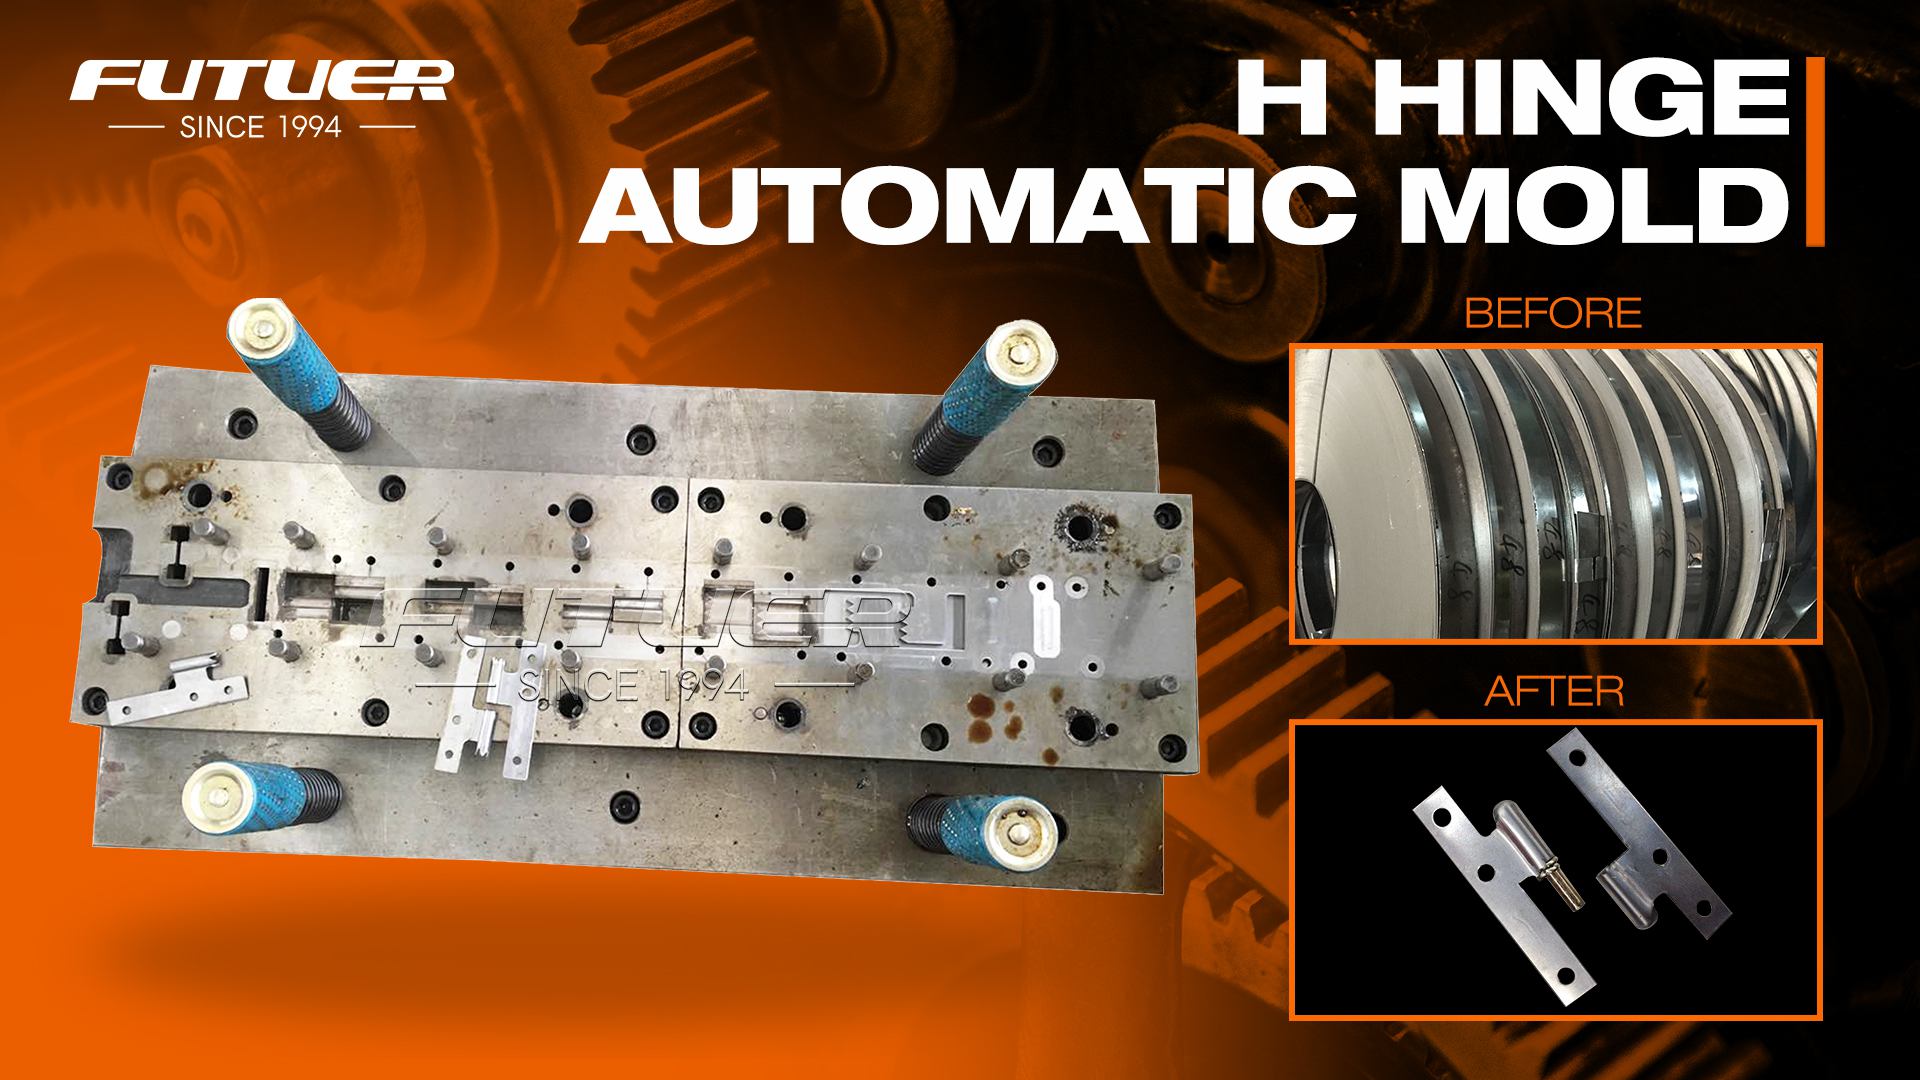 H Hinge Automatic Mold